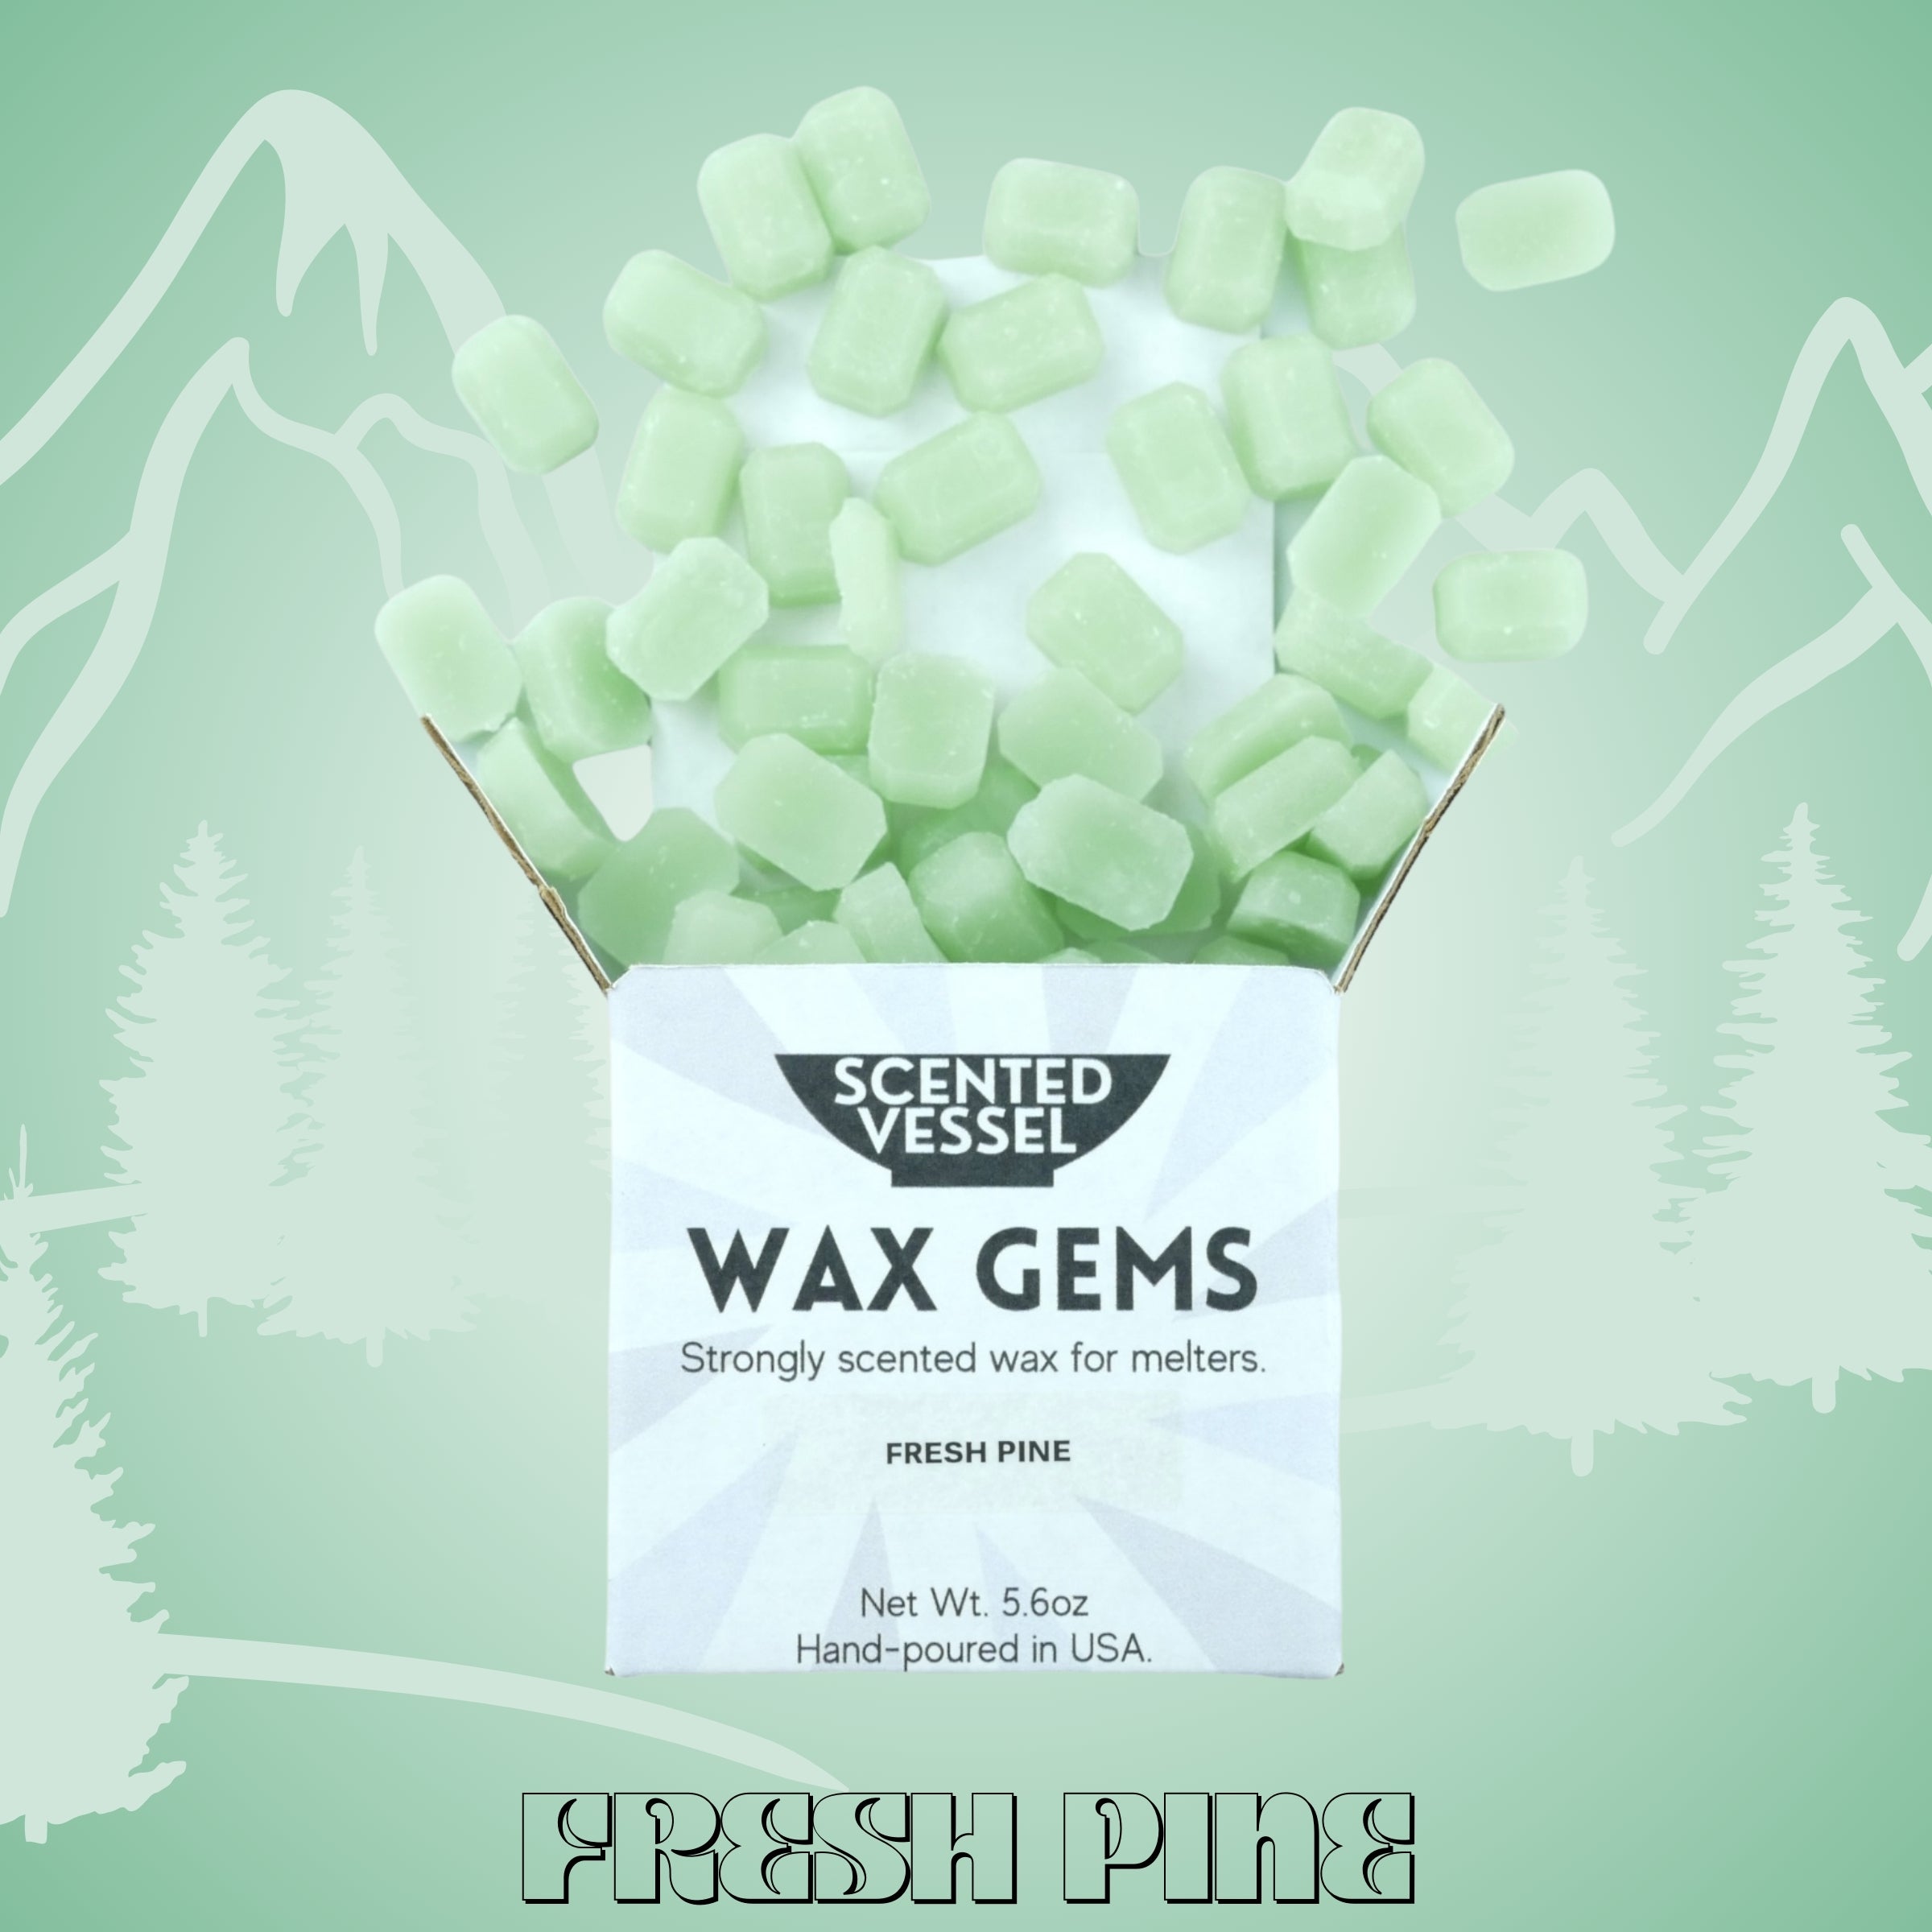 Fresh Pine 5.6oz Wax Gems by Scented Vessel